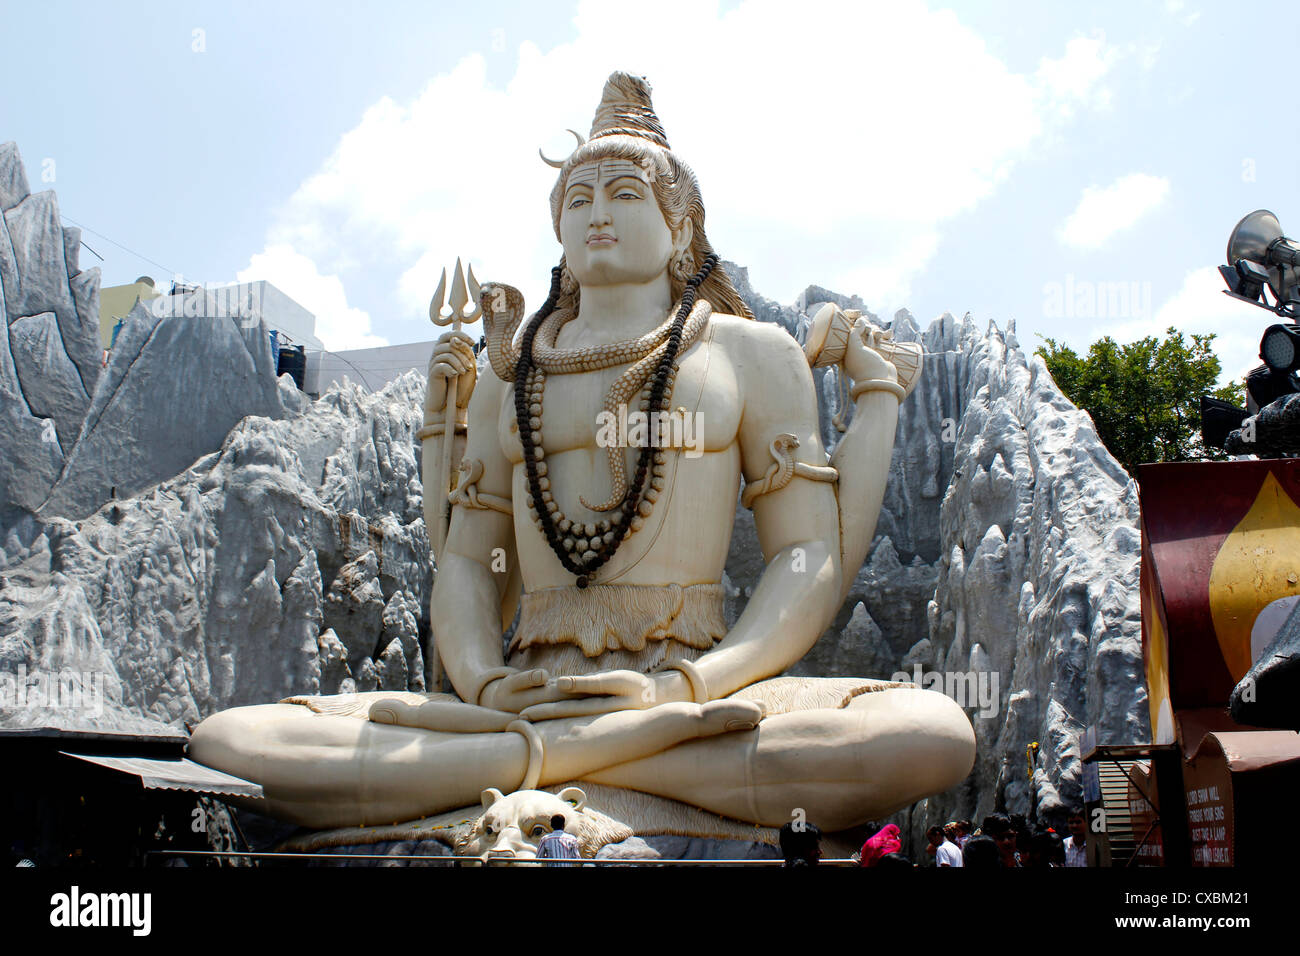 The 65 feet tall statue of Hindu god Shiva, the the RVM shiva temple in Bangalore, India Stock Photo